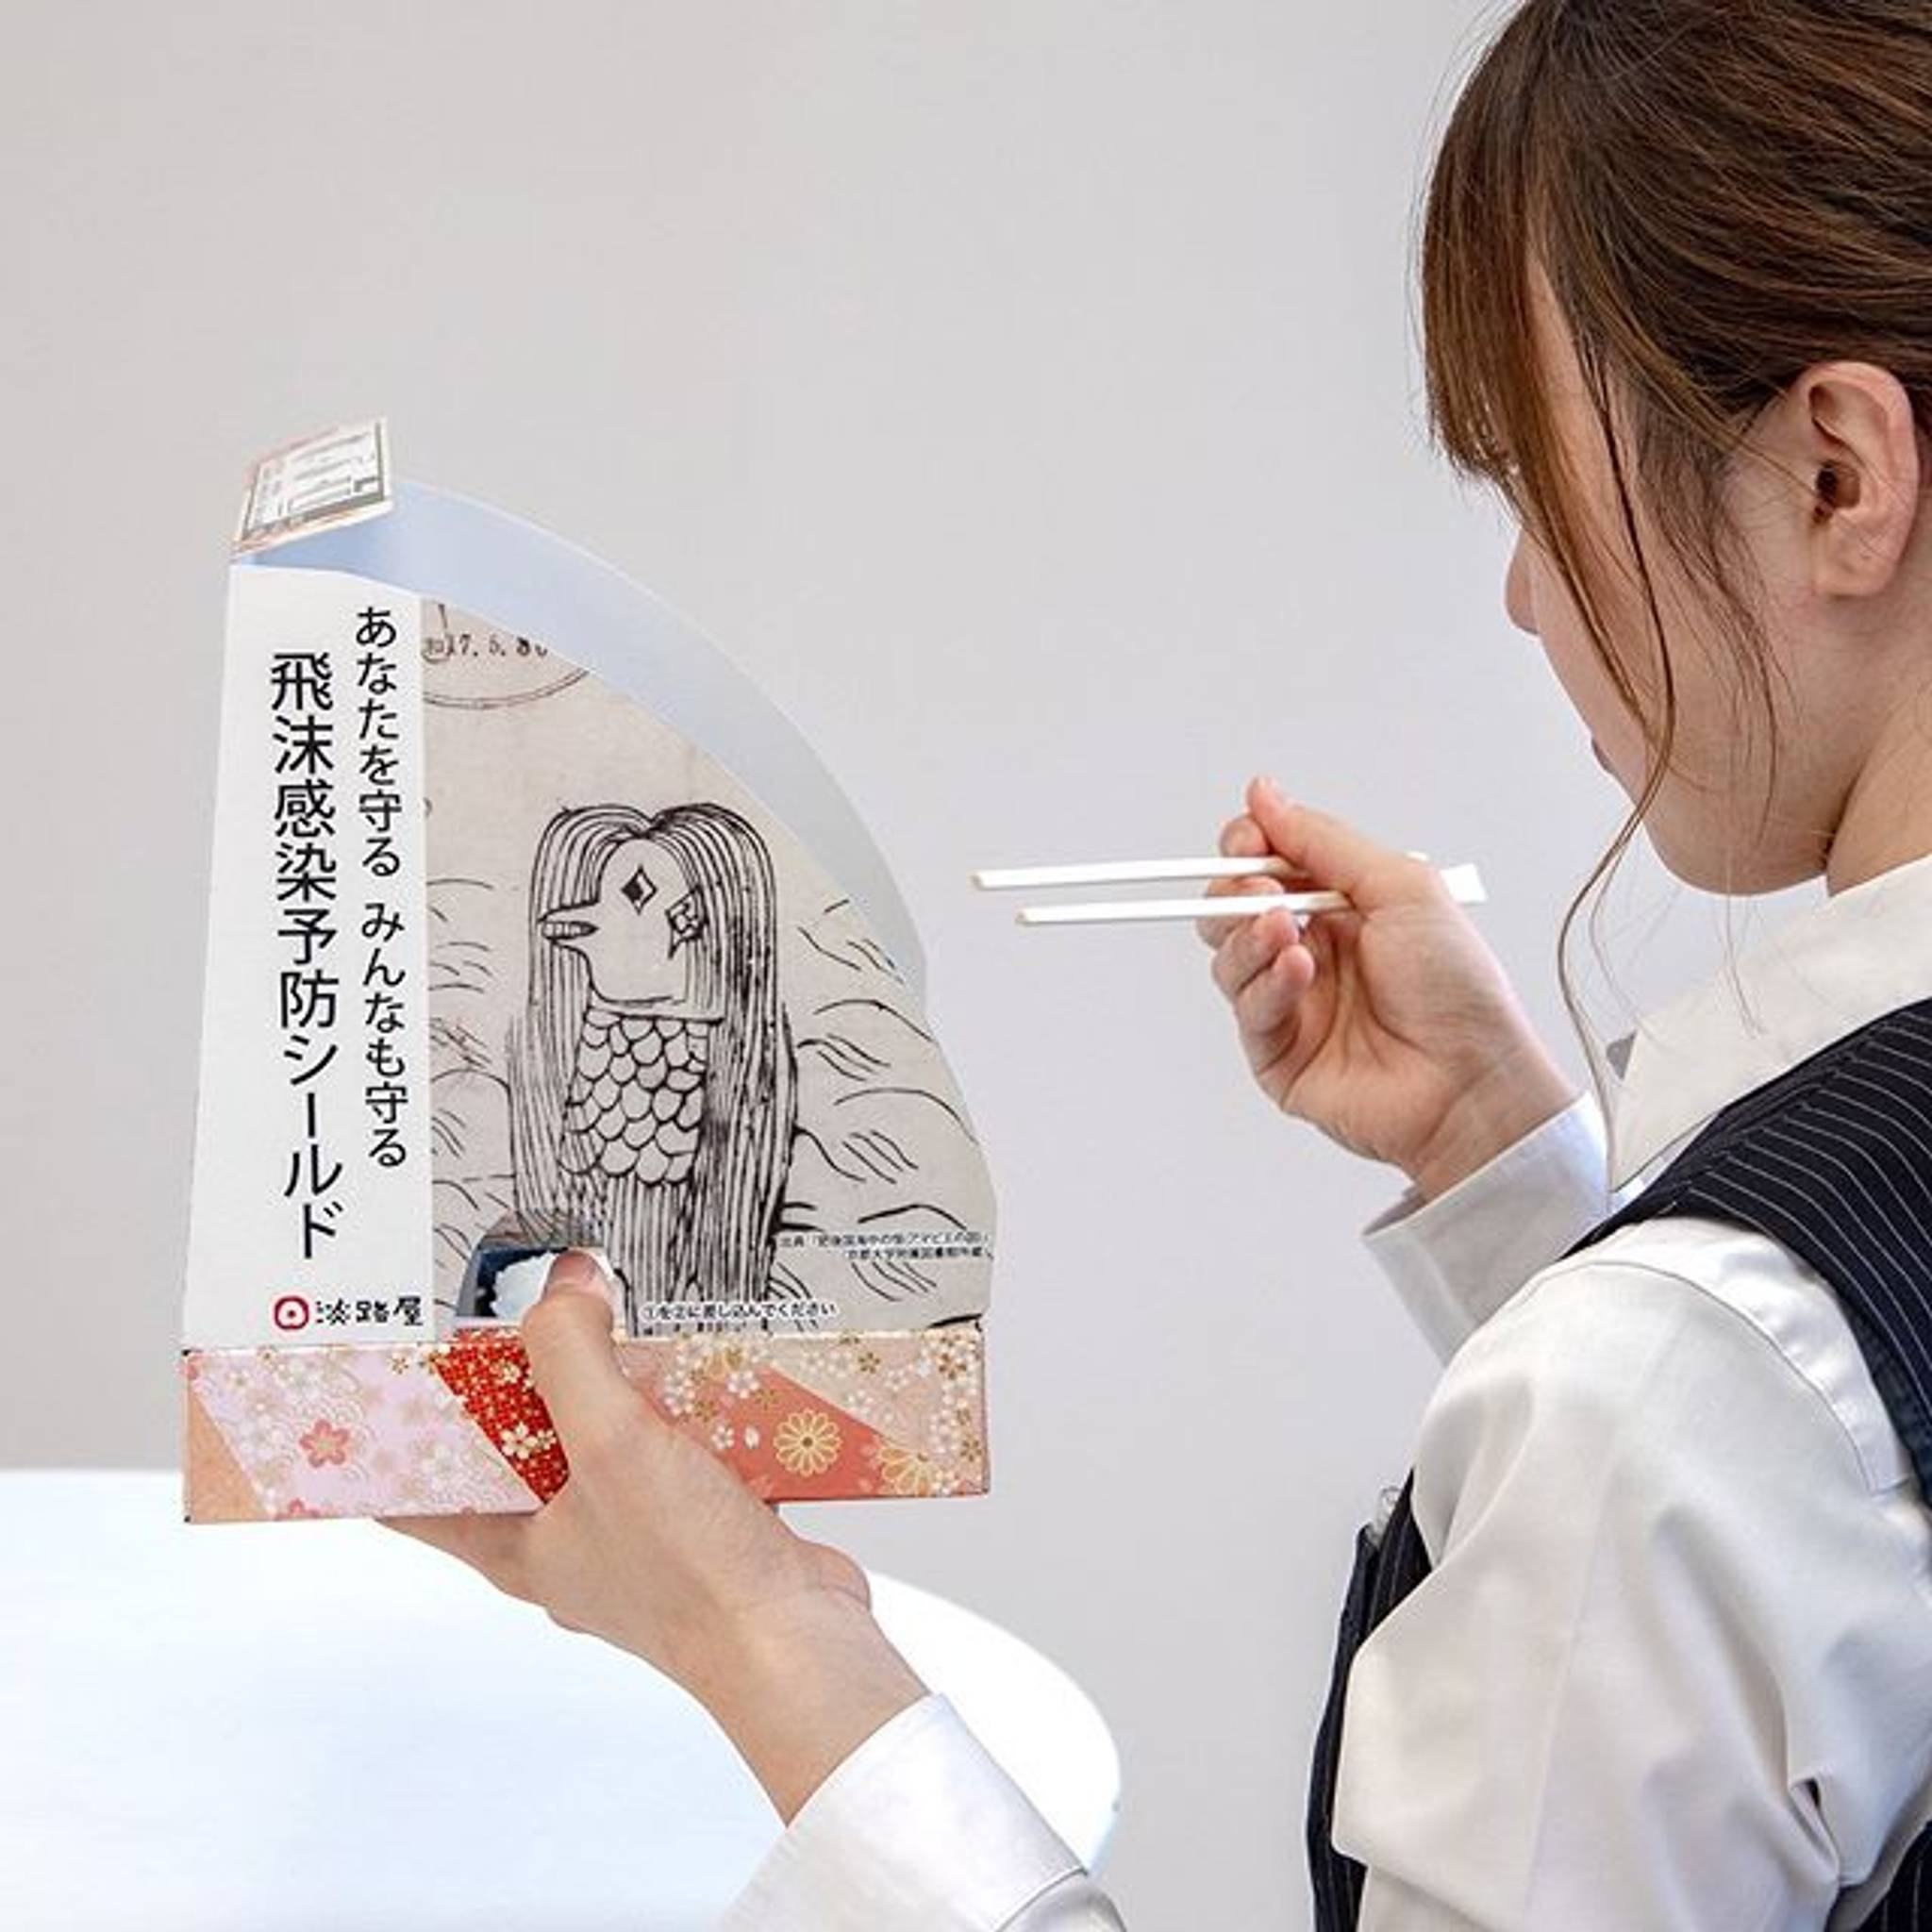 Awajiya box makes on-the-go meals in Japan hygienic